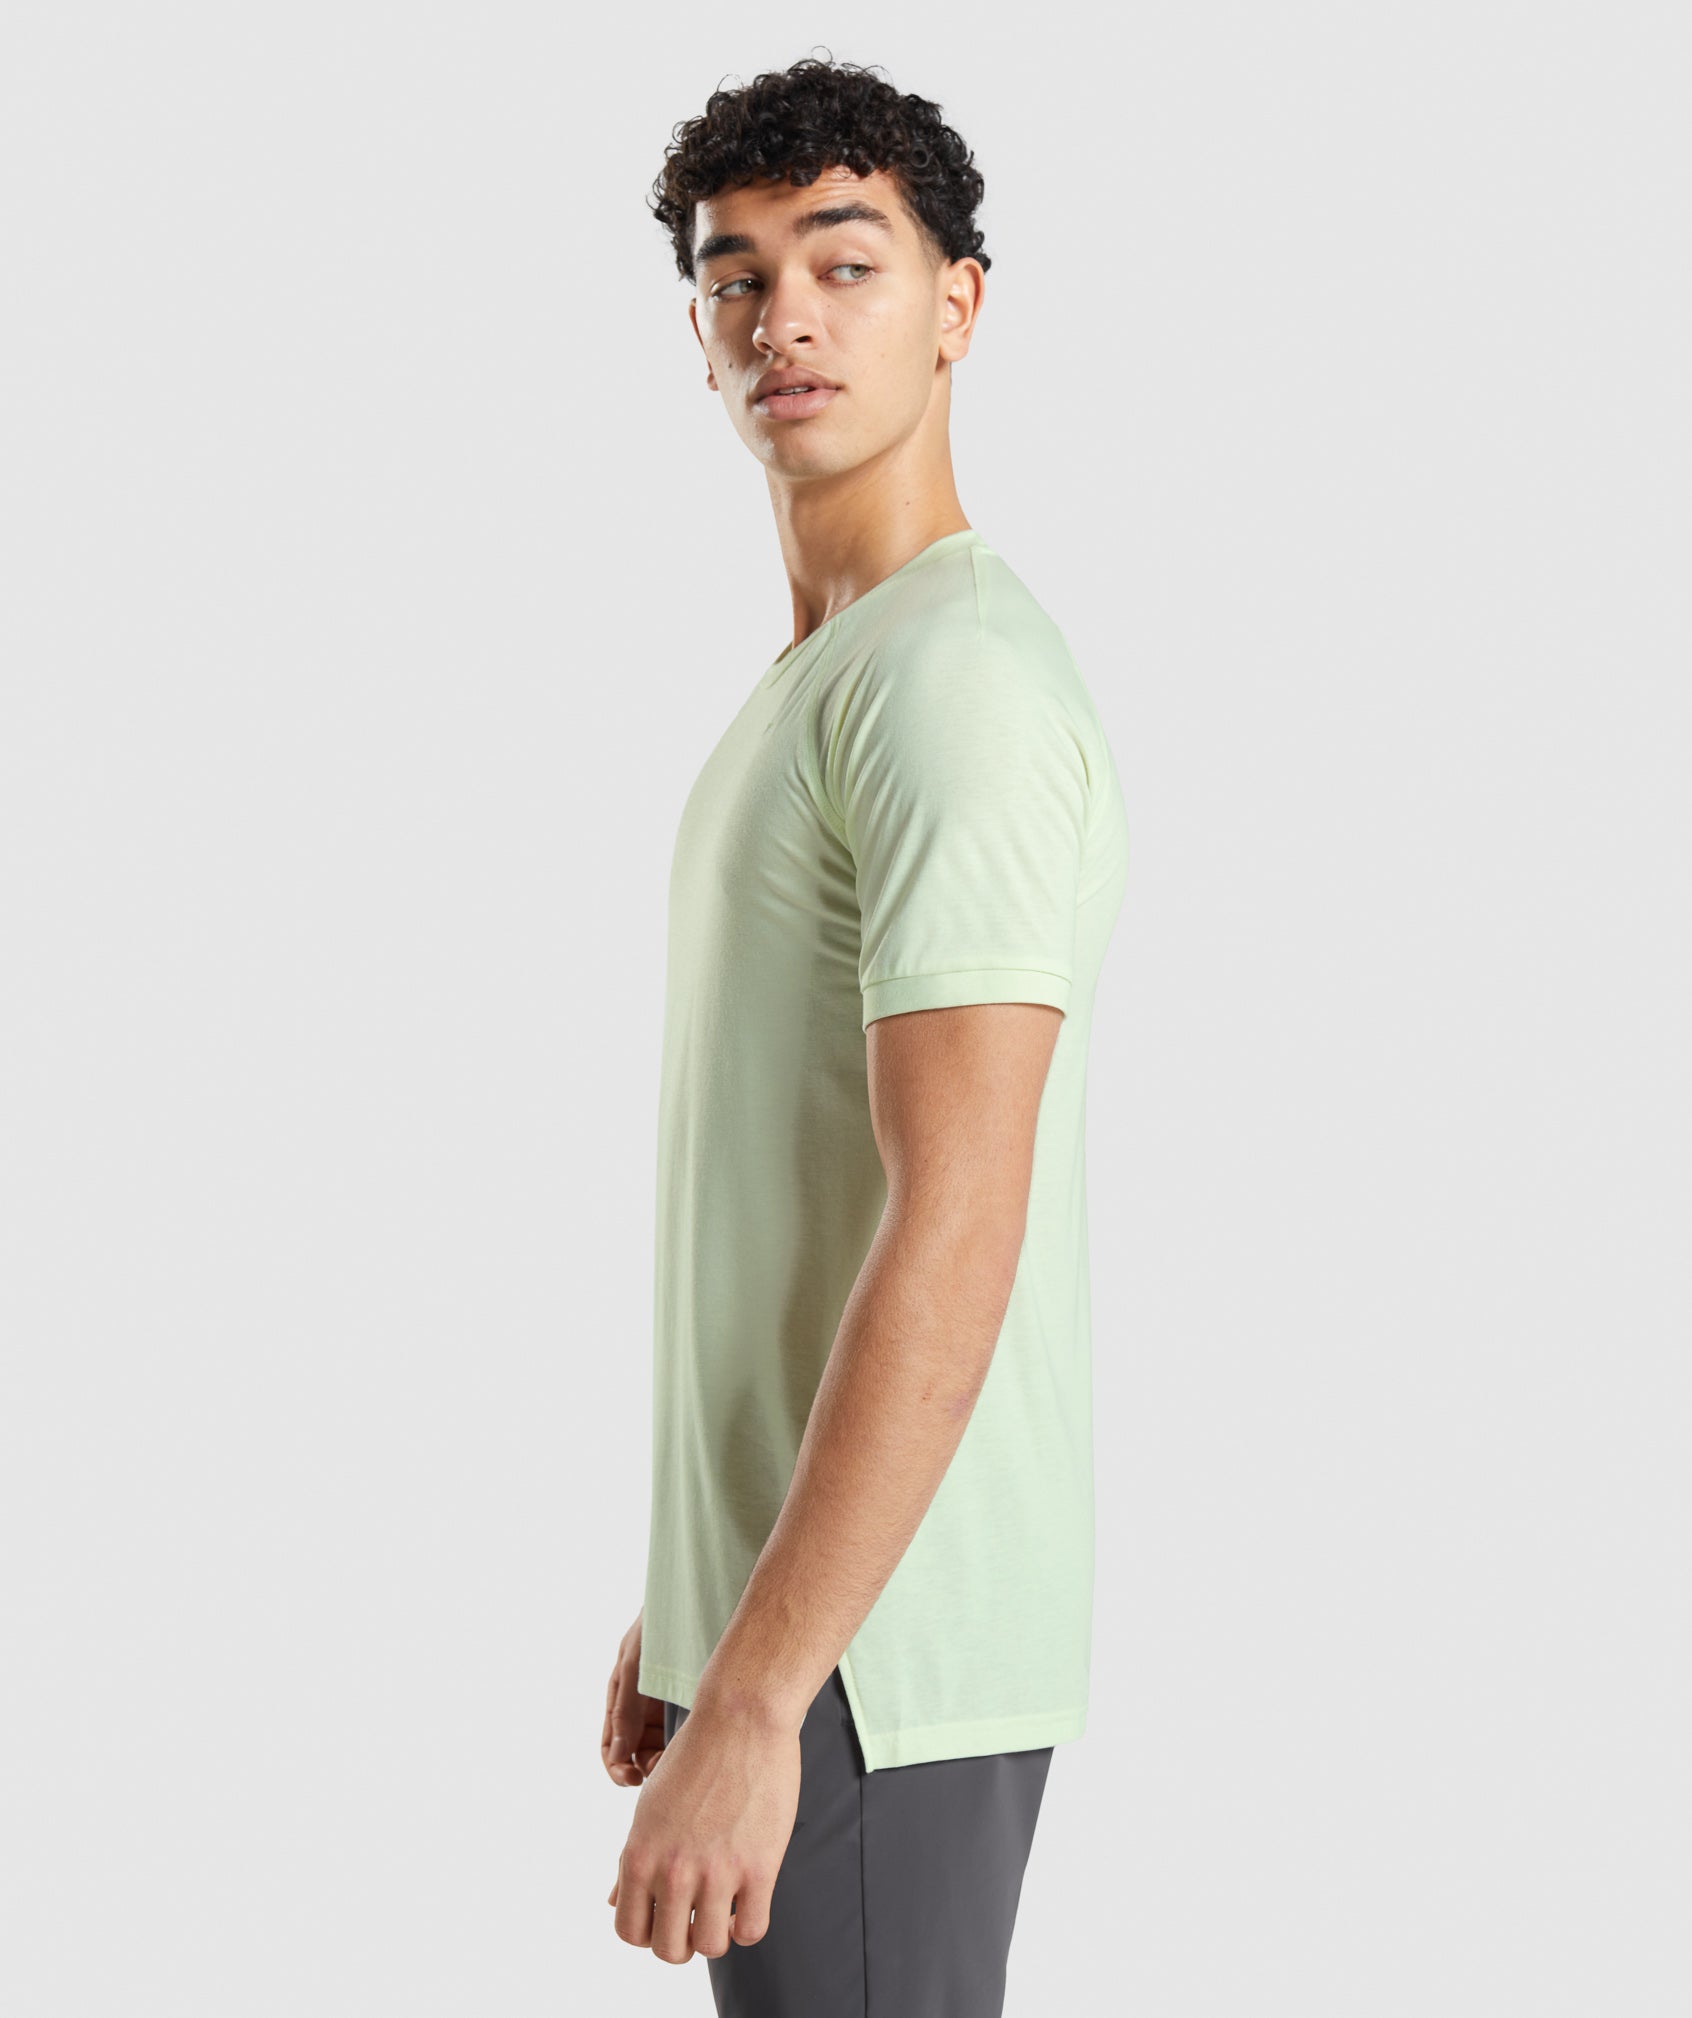 Studio Amplify T-Shirt in Cucumber Green - view 3